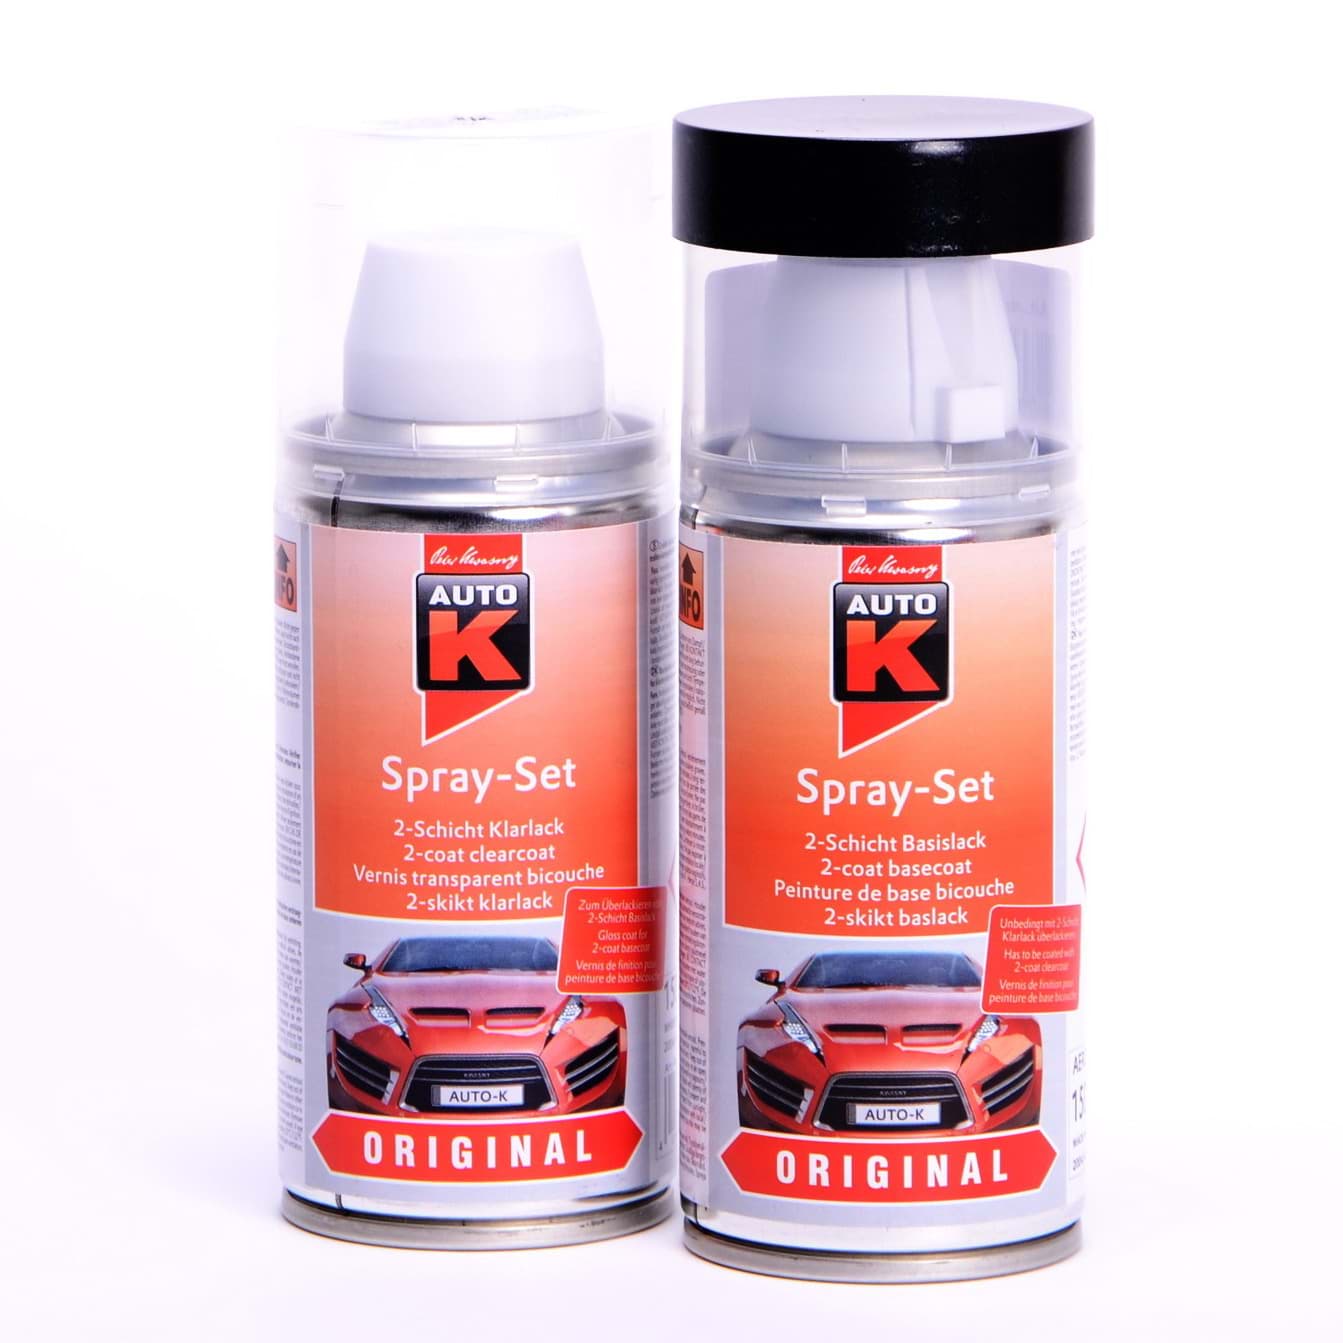 Afbeelding van Auto-K Spray-Set Autolack für Opel 545 Bordeauxrot met 21340